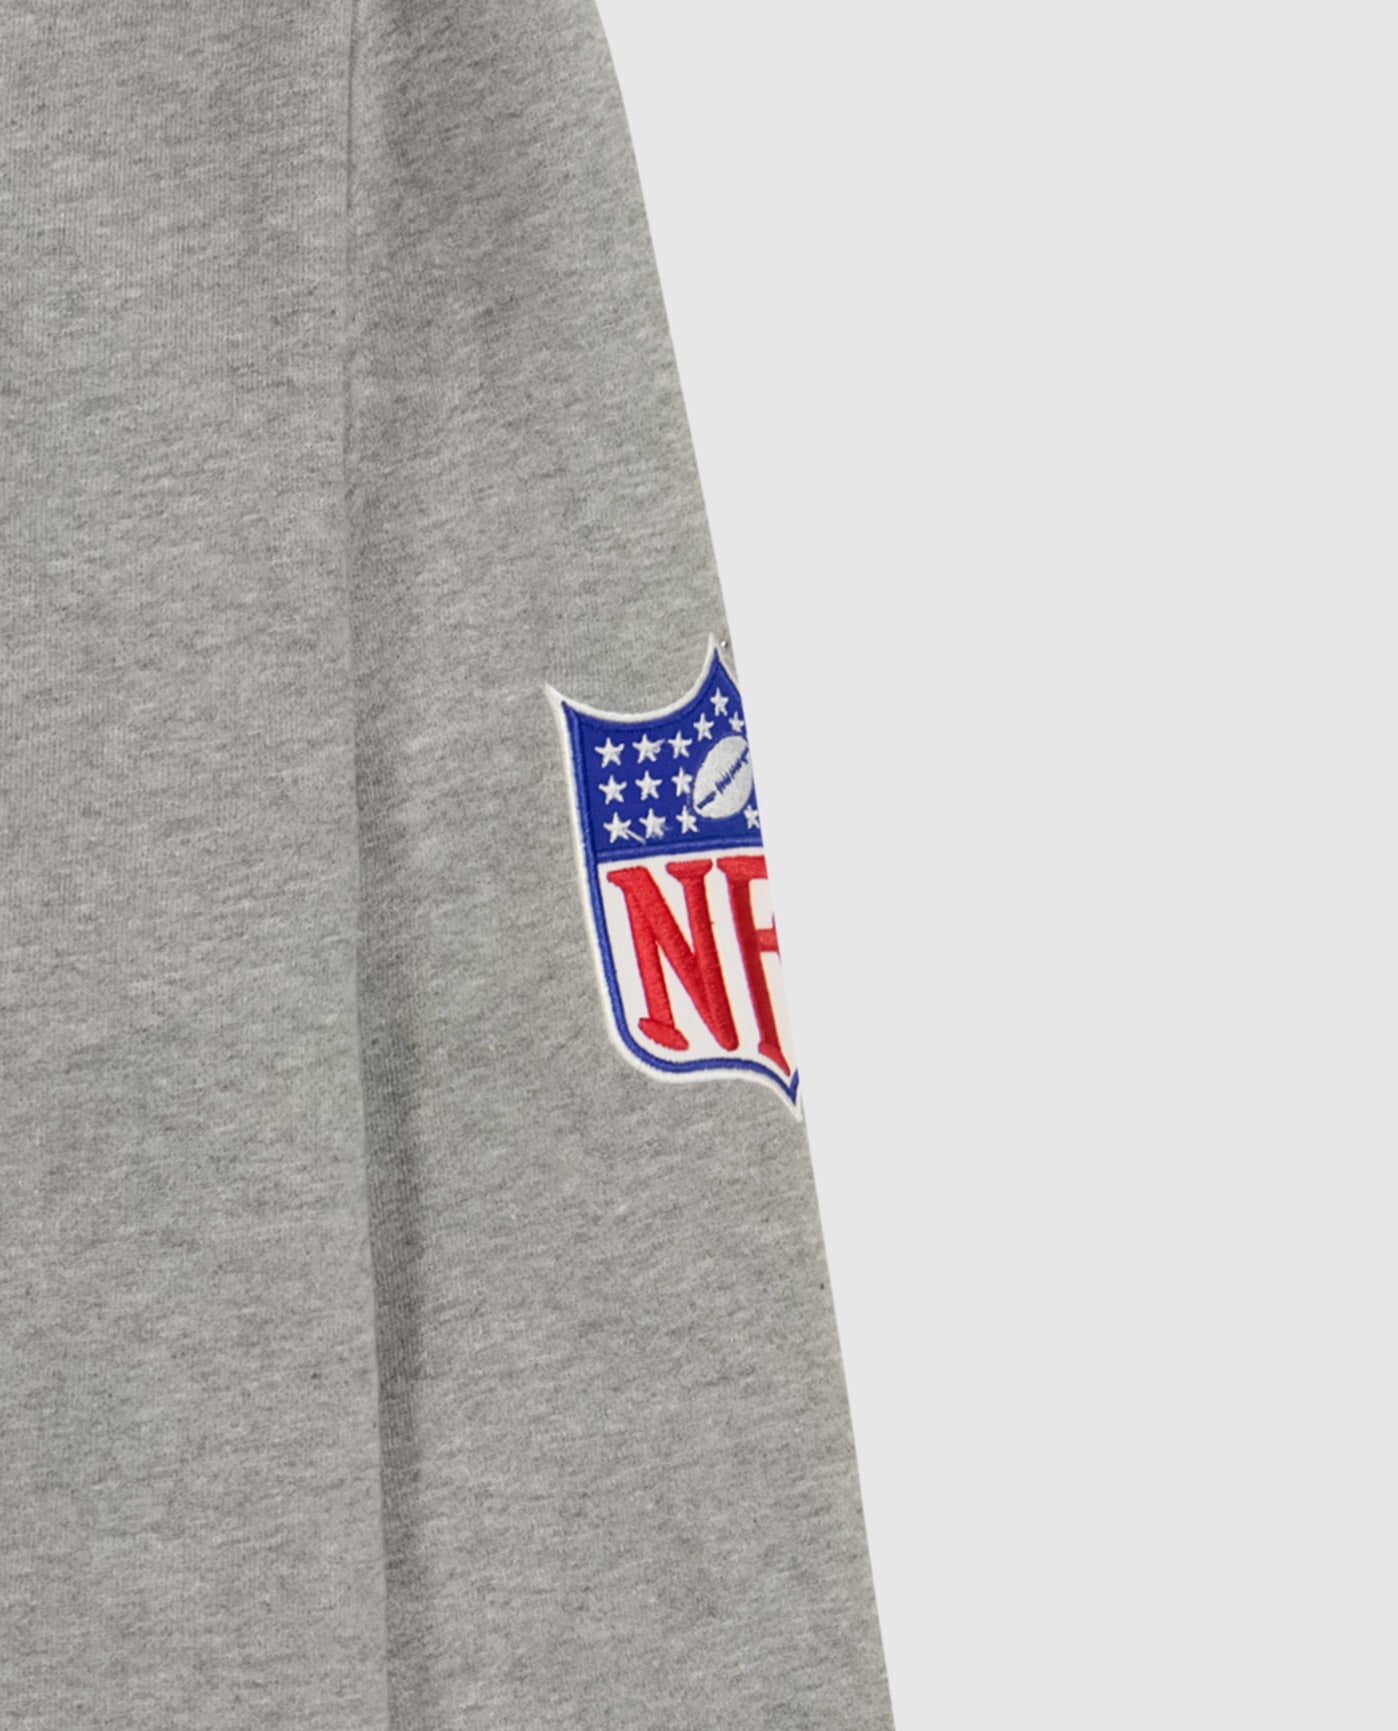 NFL Logo on Sleeve | Seahawks Heather Grey